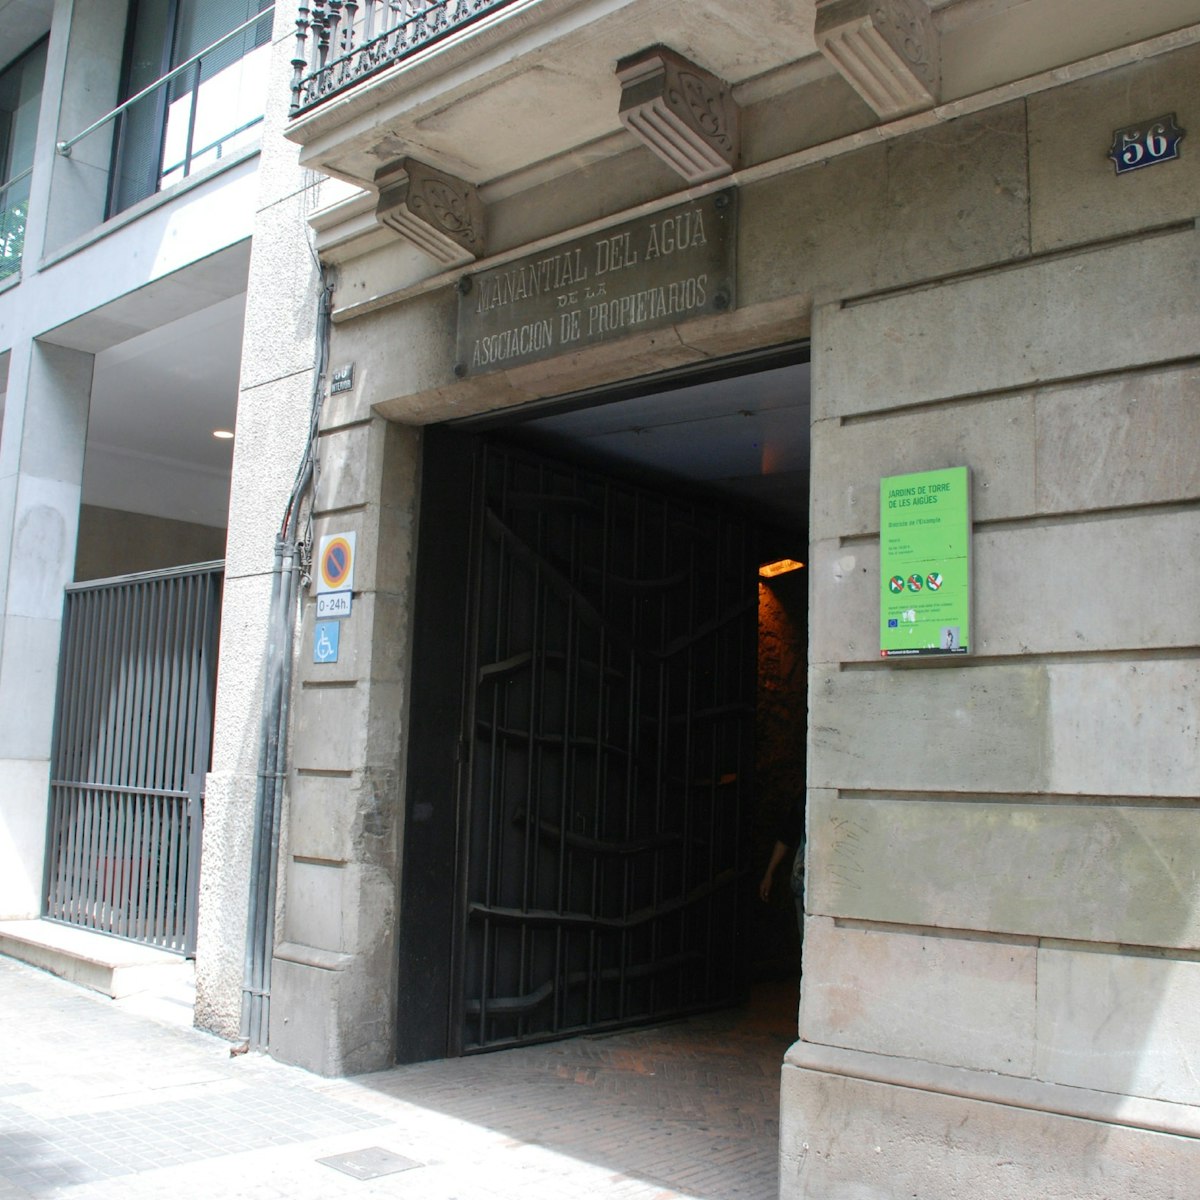 Entrance to the Platja de l'Eixample